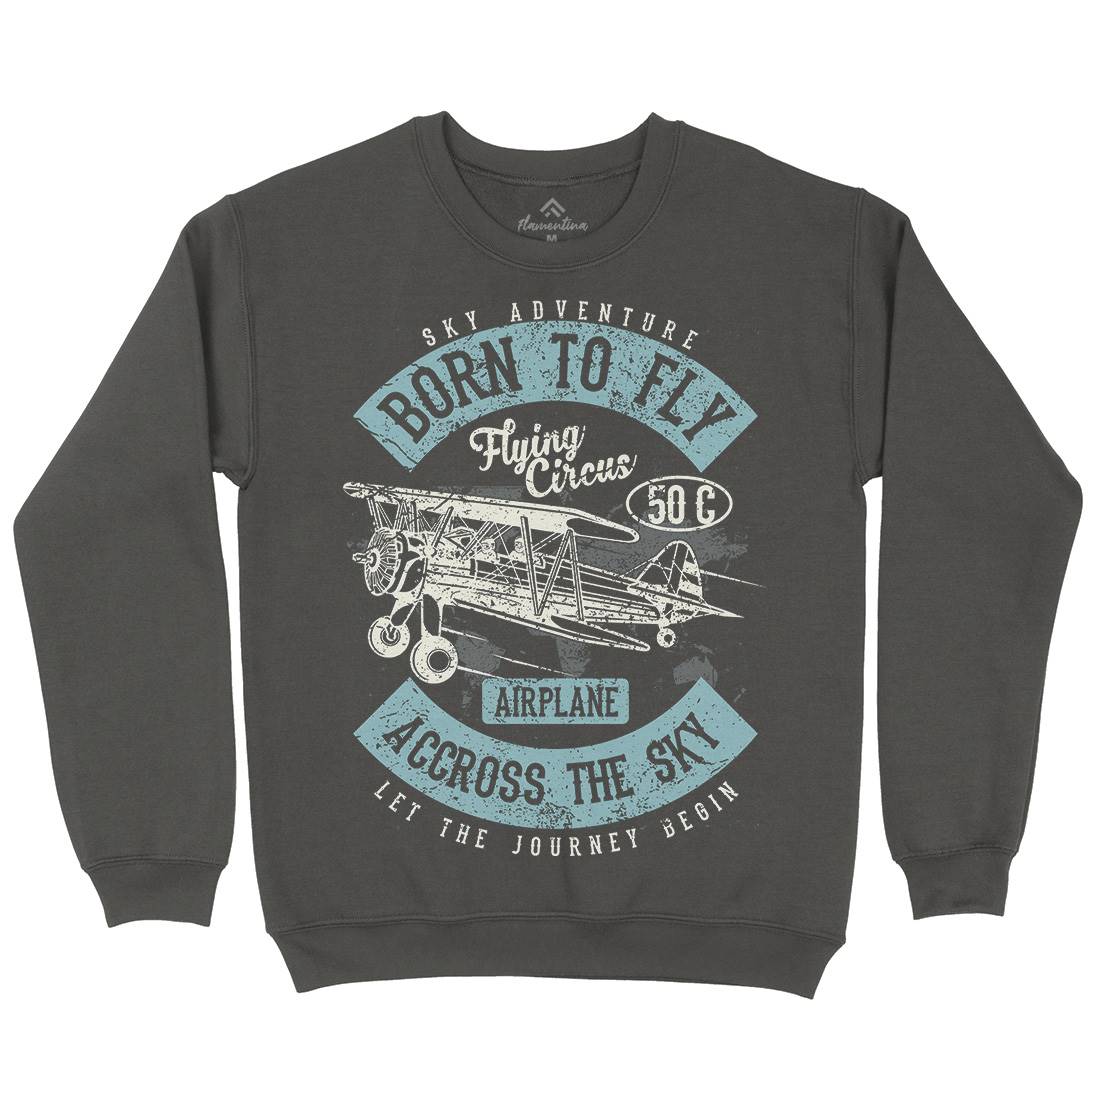 Born To Fly Mens Crew Neck Sweatshirt Vehicles A019